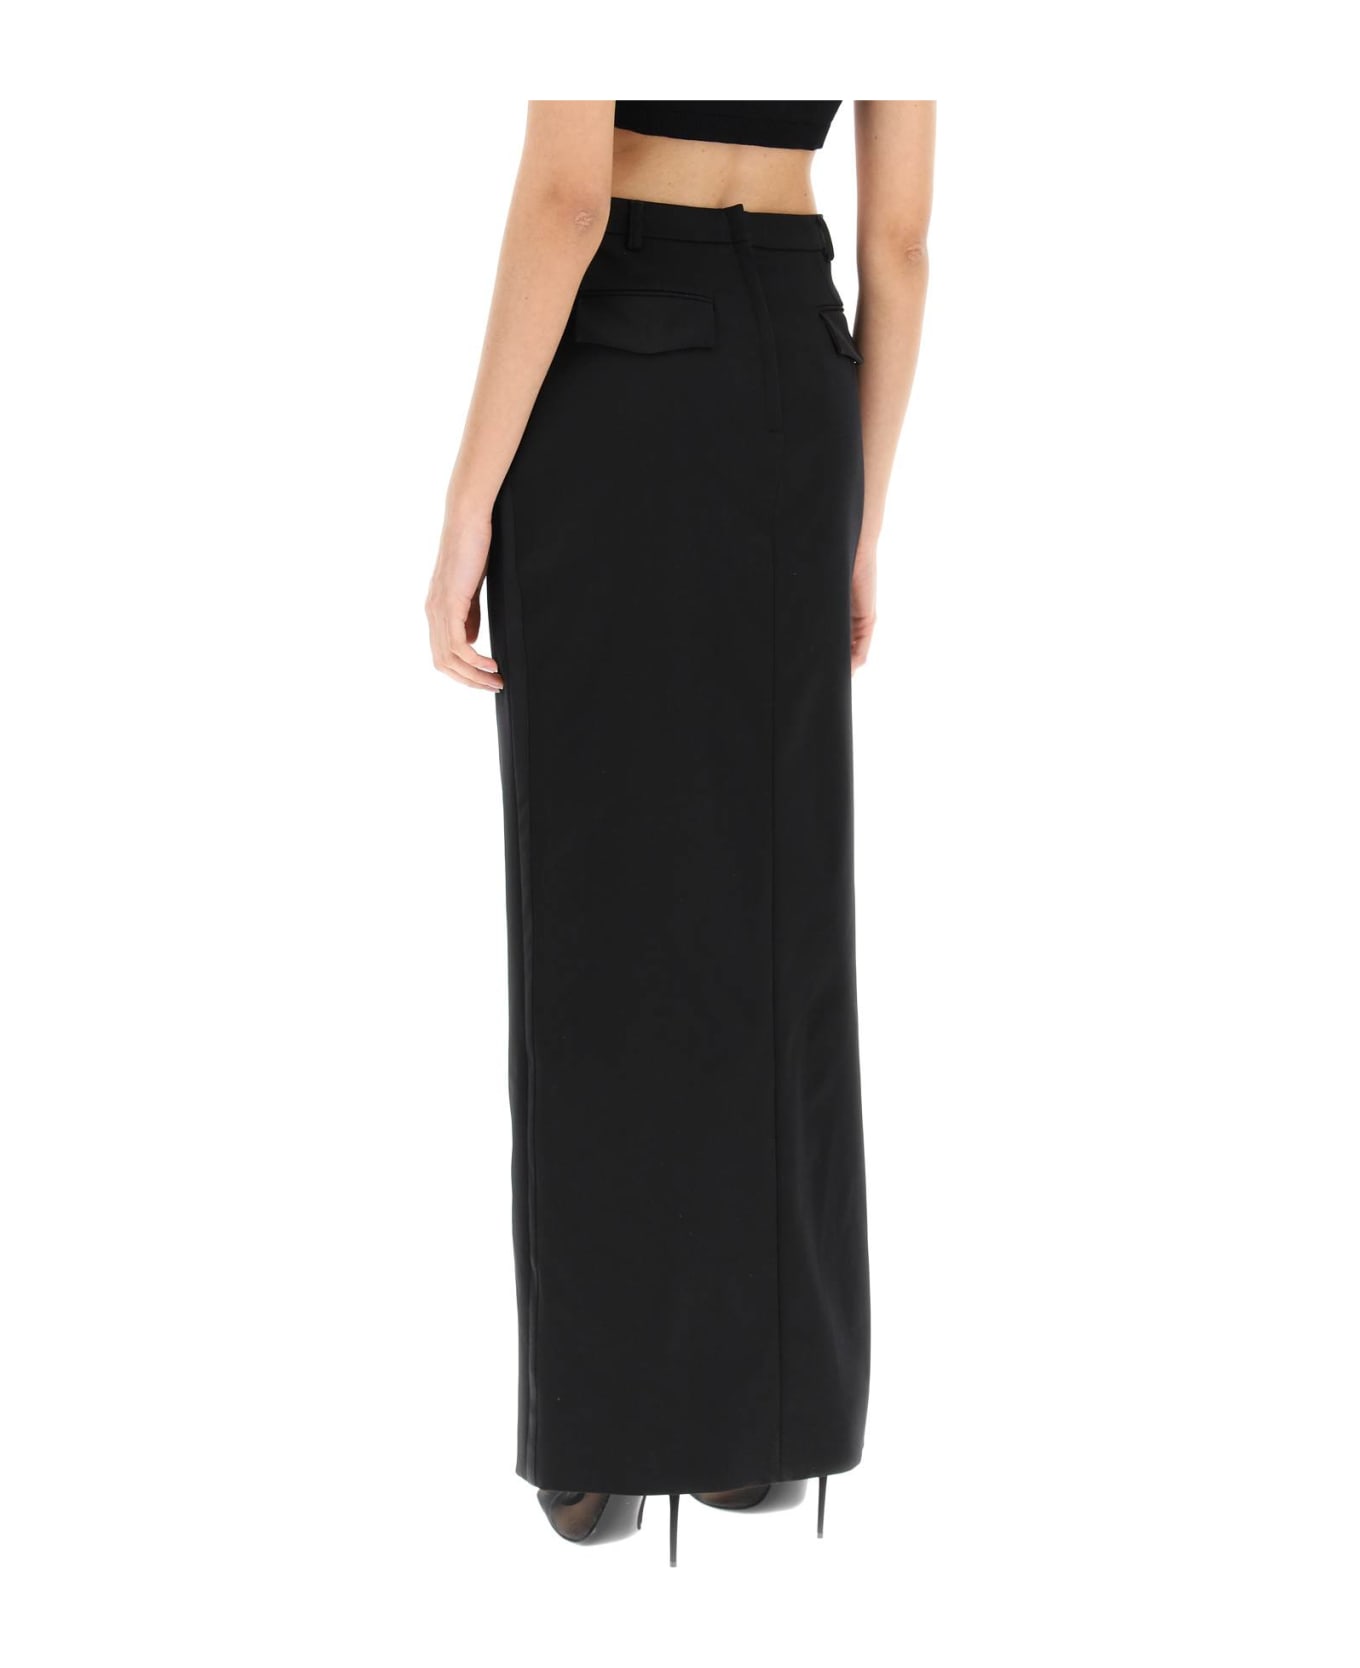 Dolce & Gabbana Skirt - Black スカート